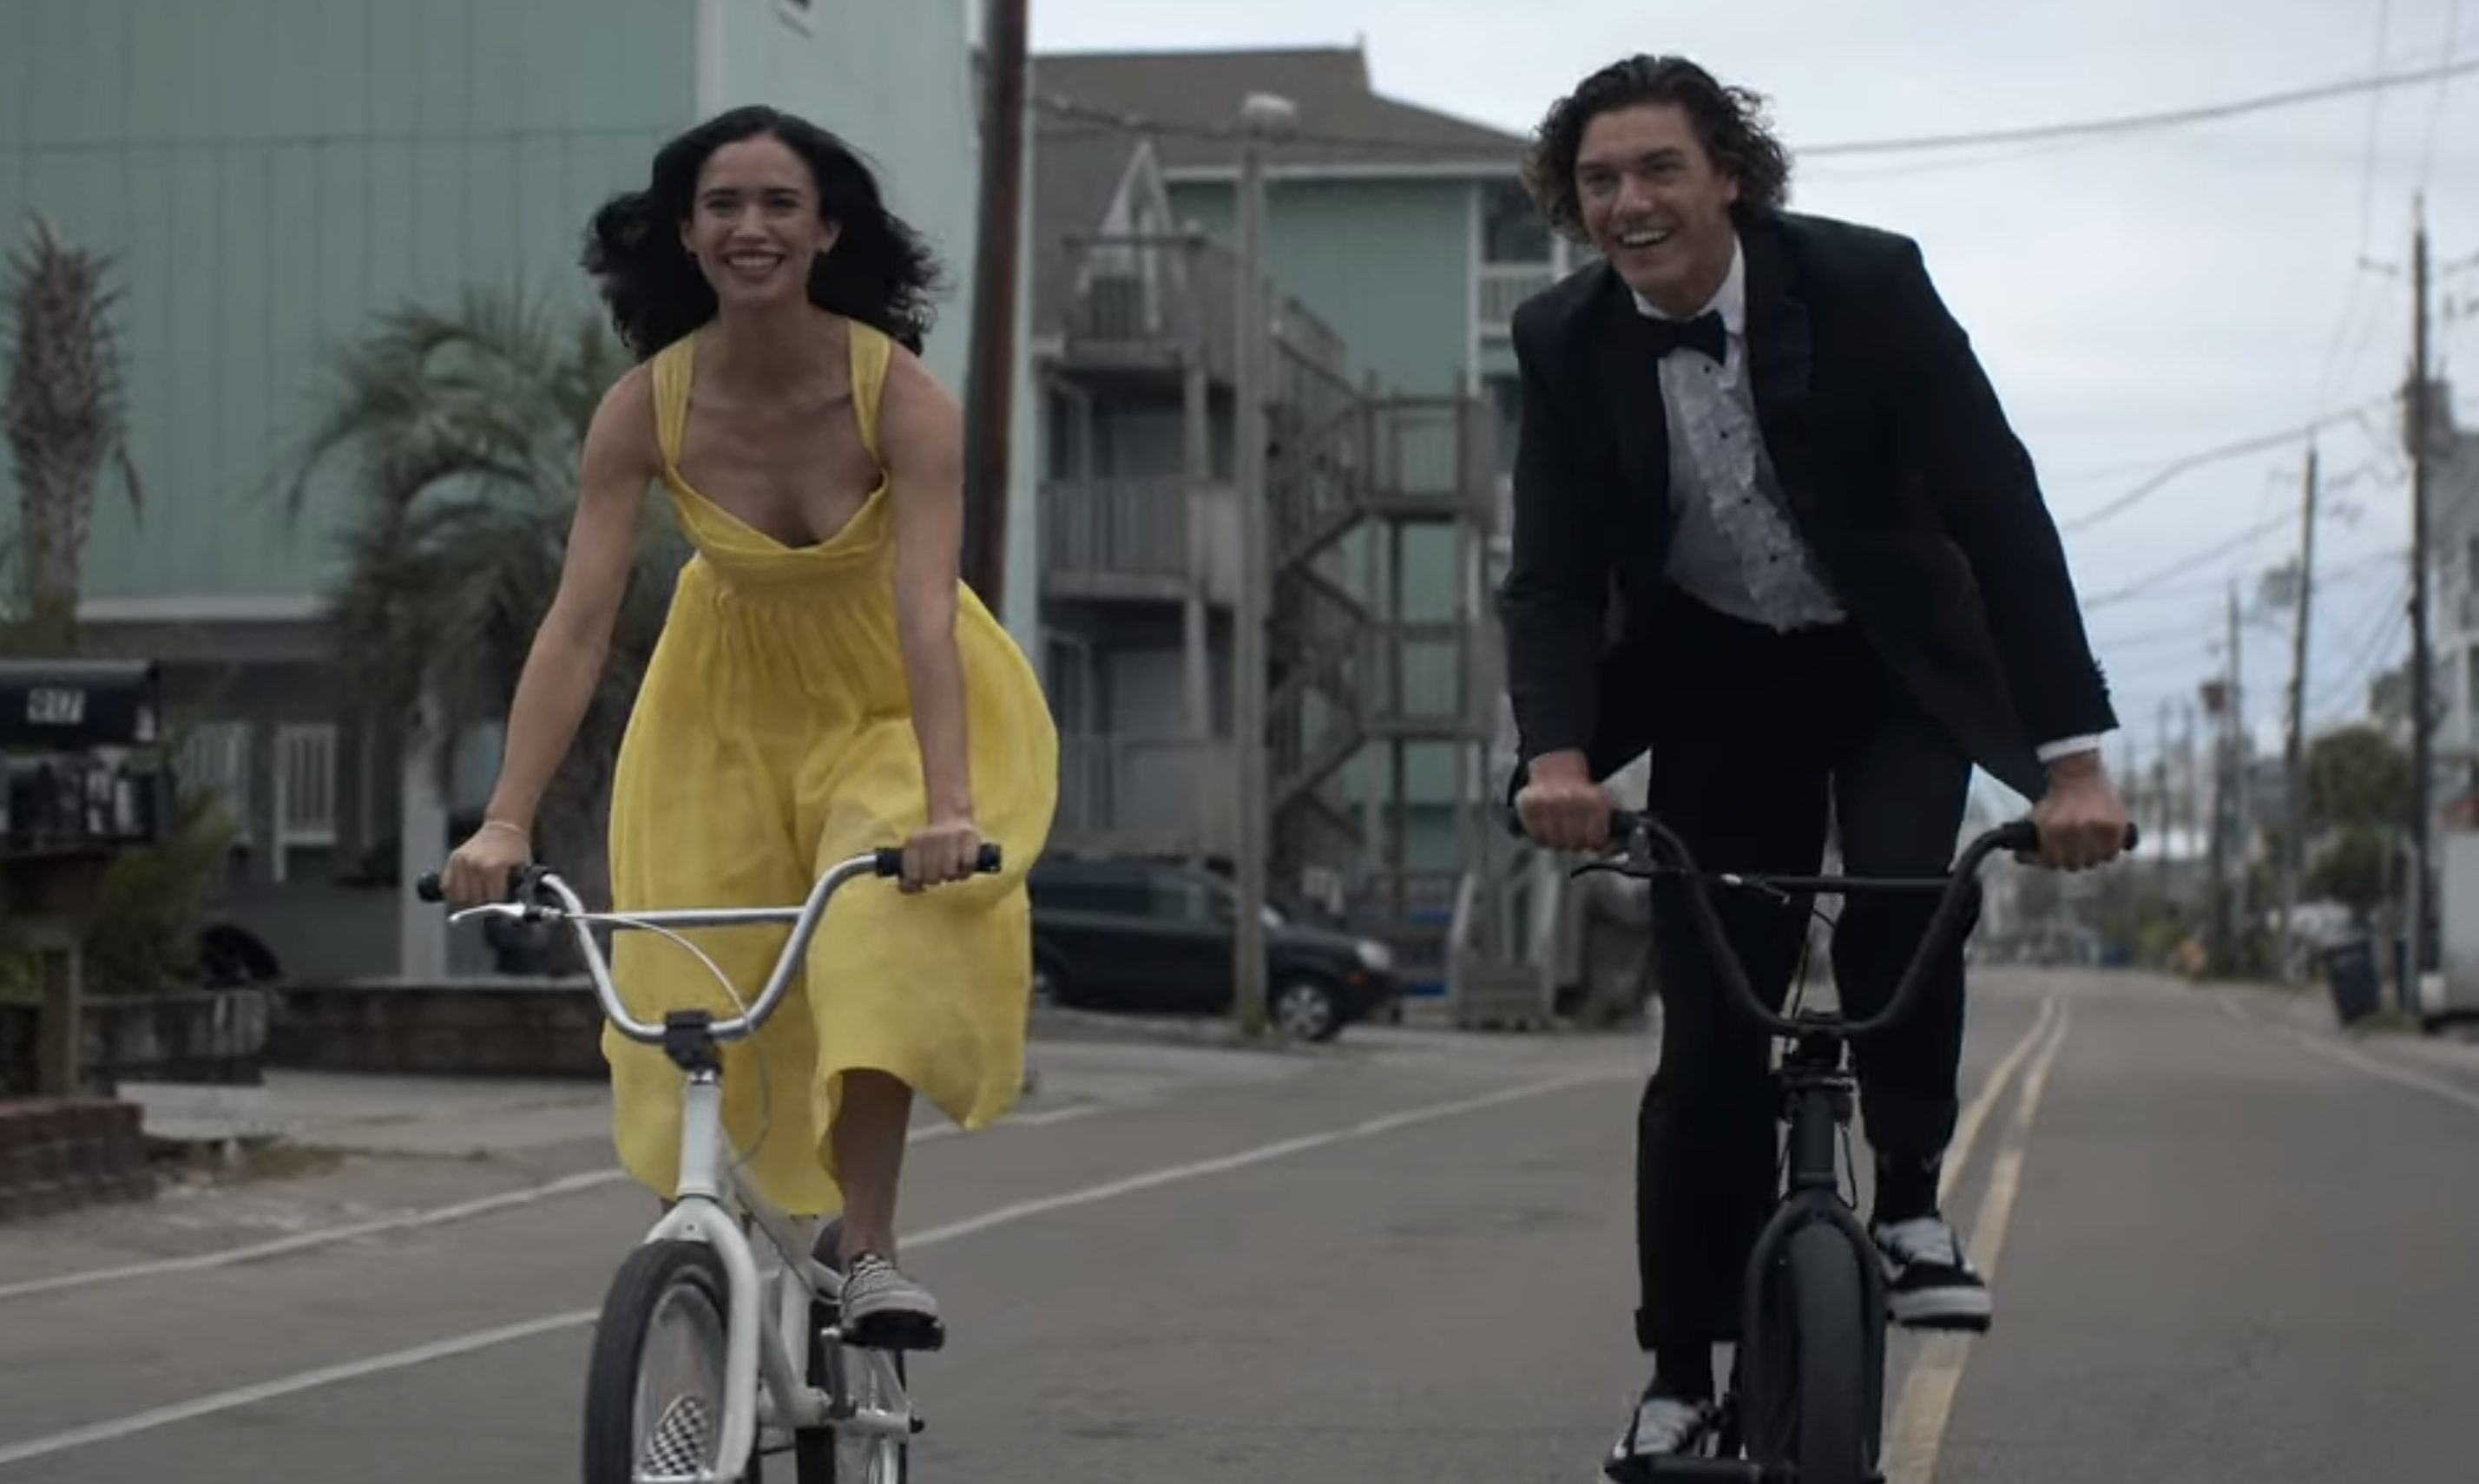 Auden and Eli riding bikes in their prom attire